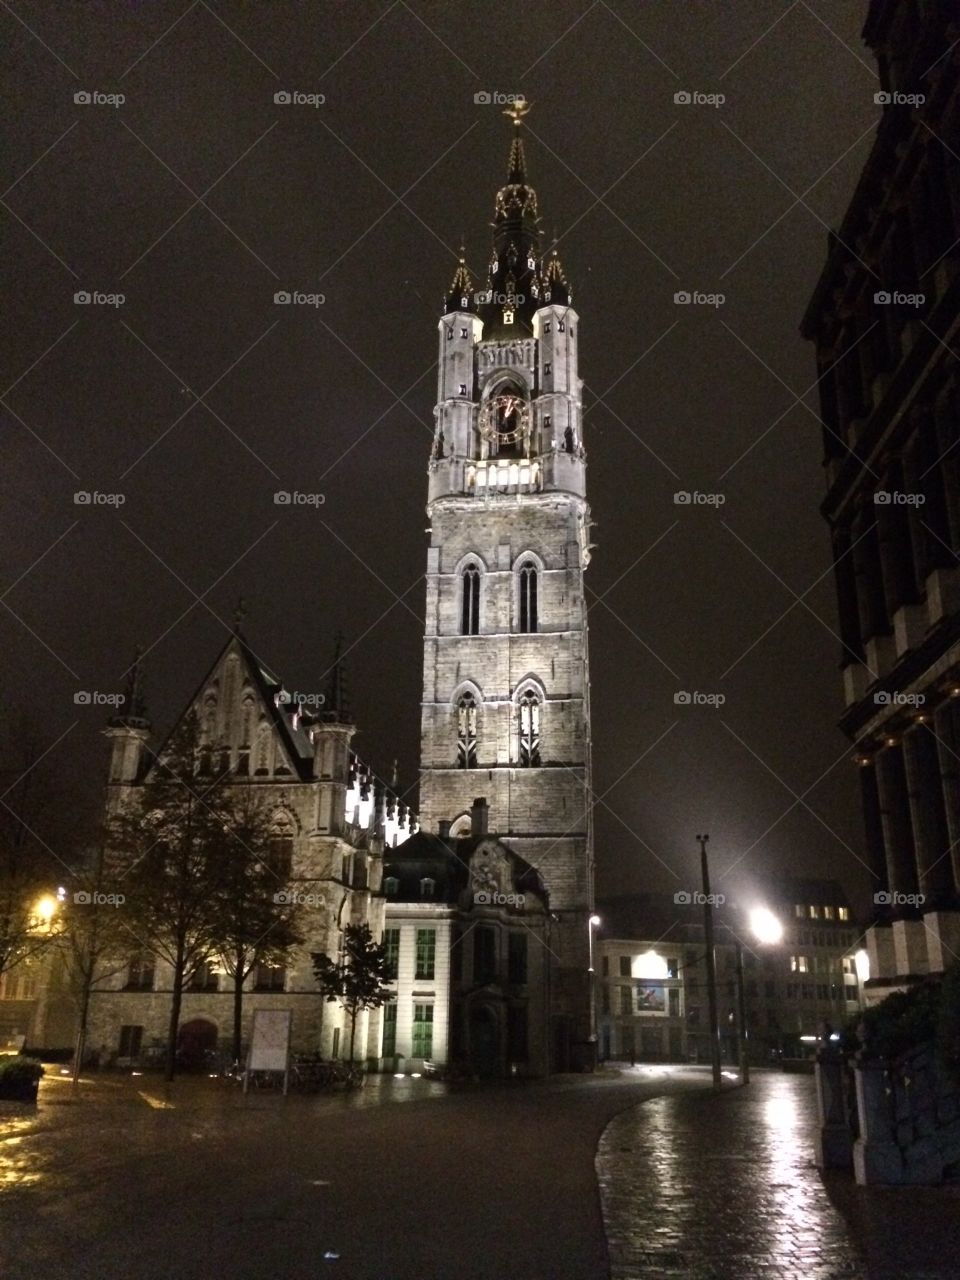 Belfry Ghent. a nighttime foto of the belfry in Ghent